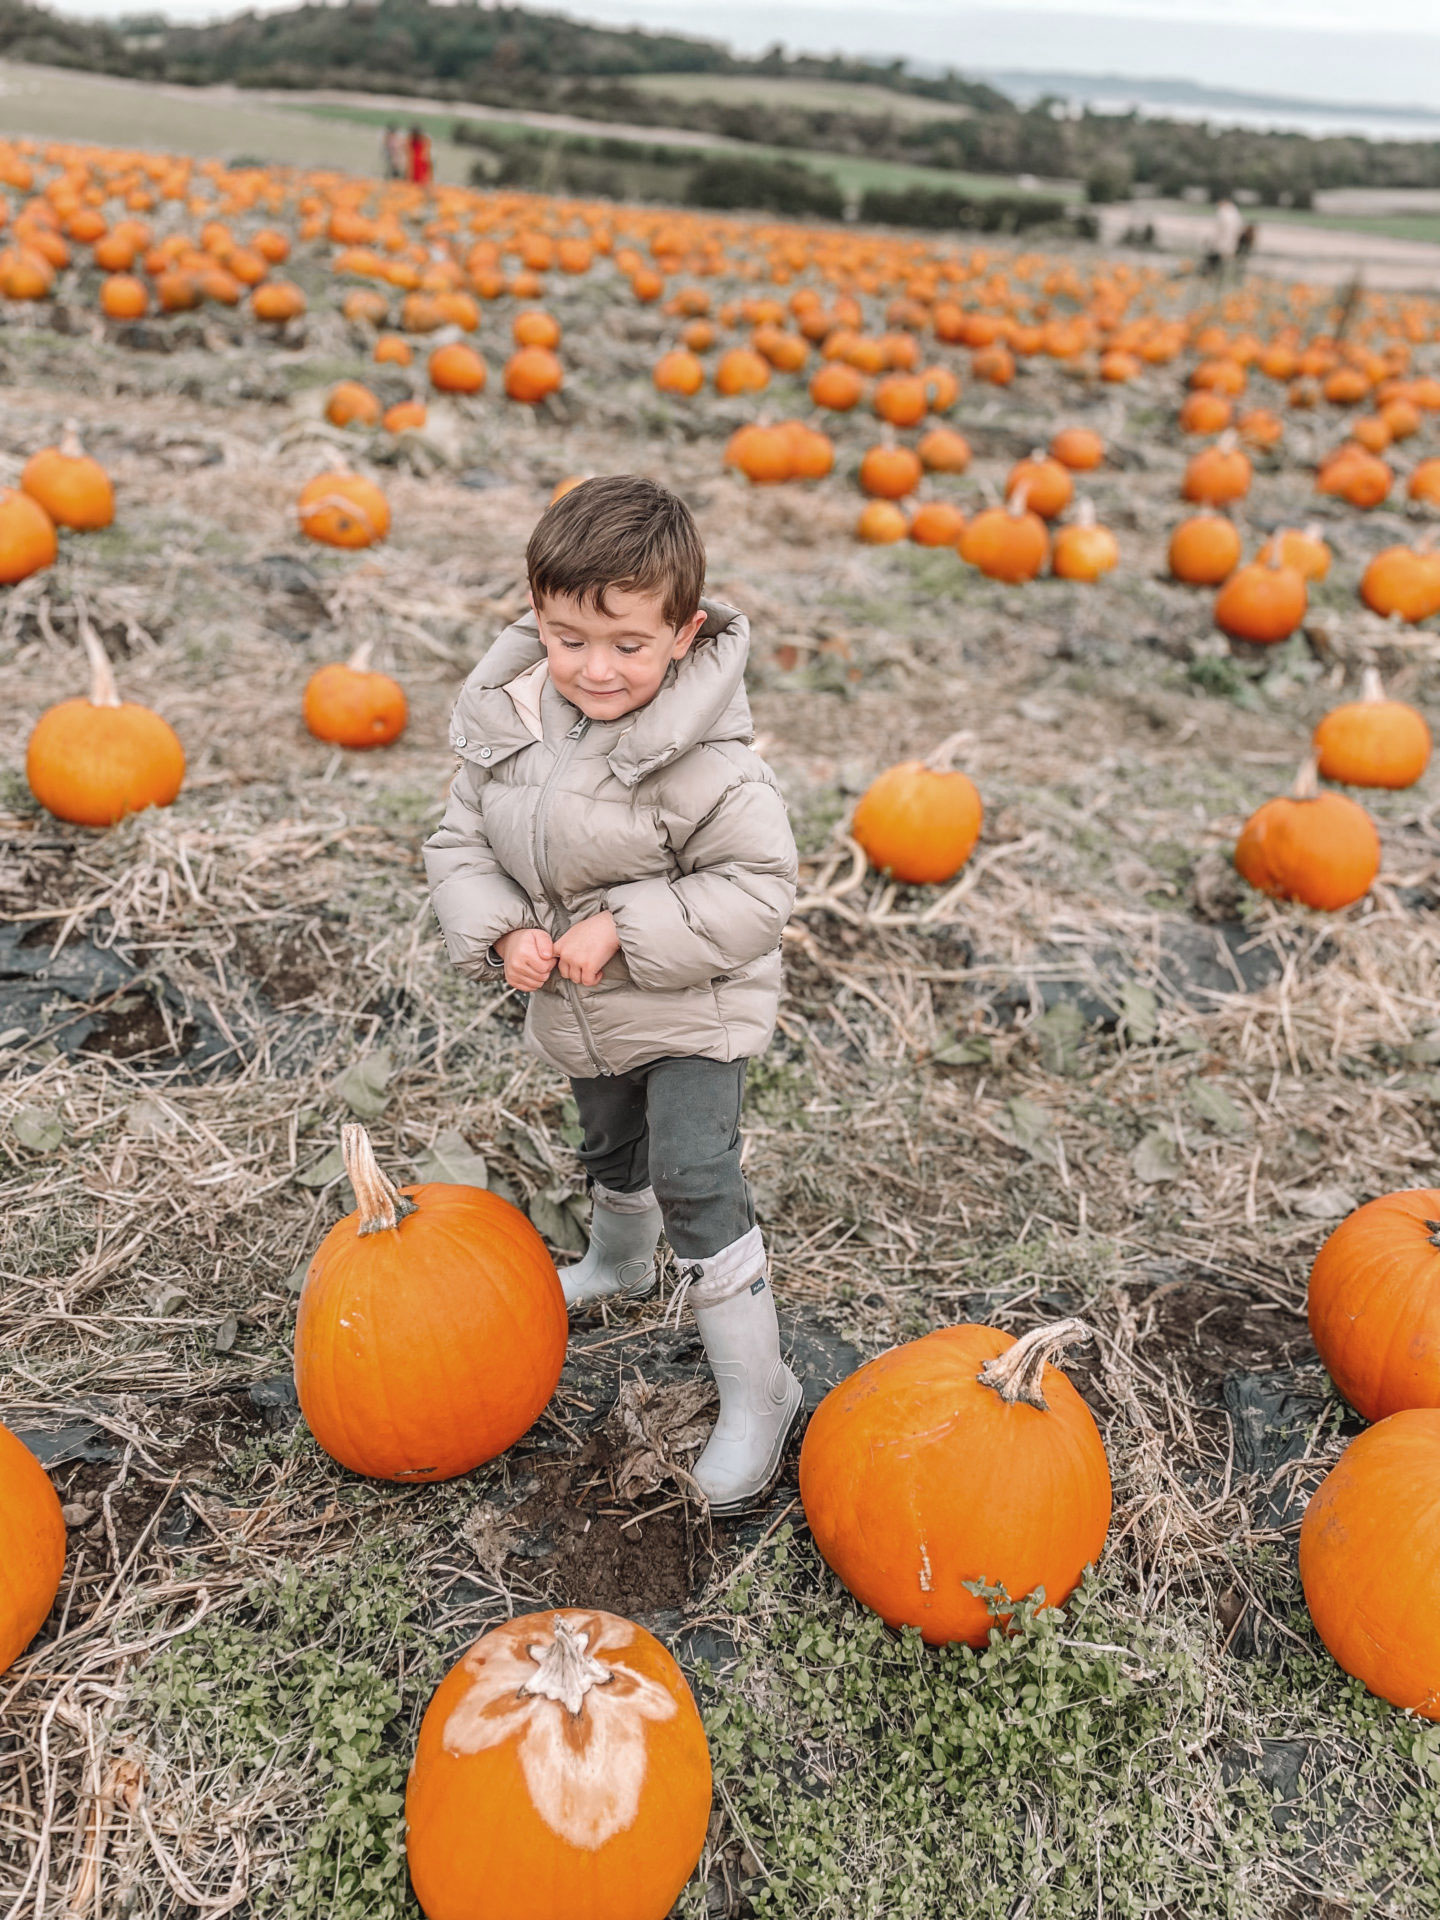 Max amongst the pumpkins